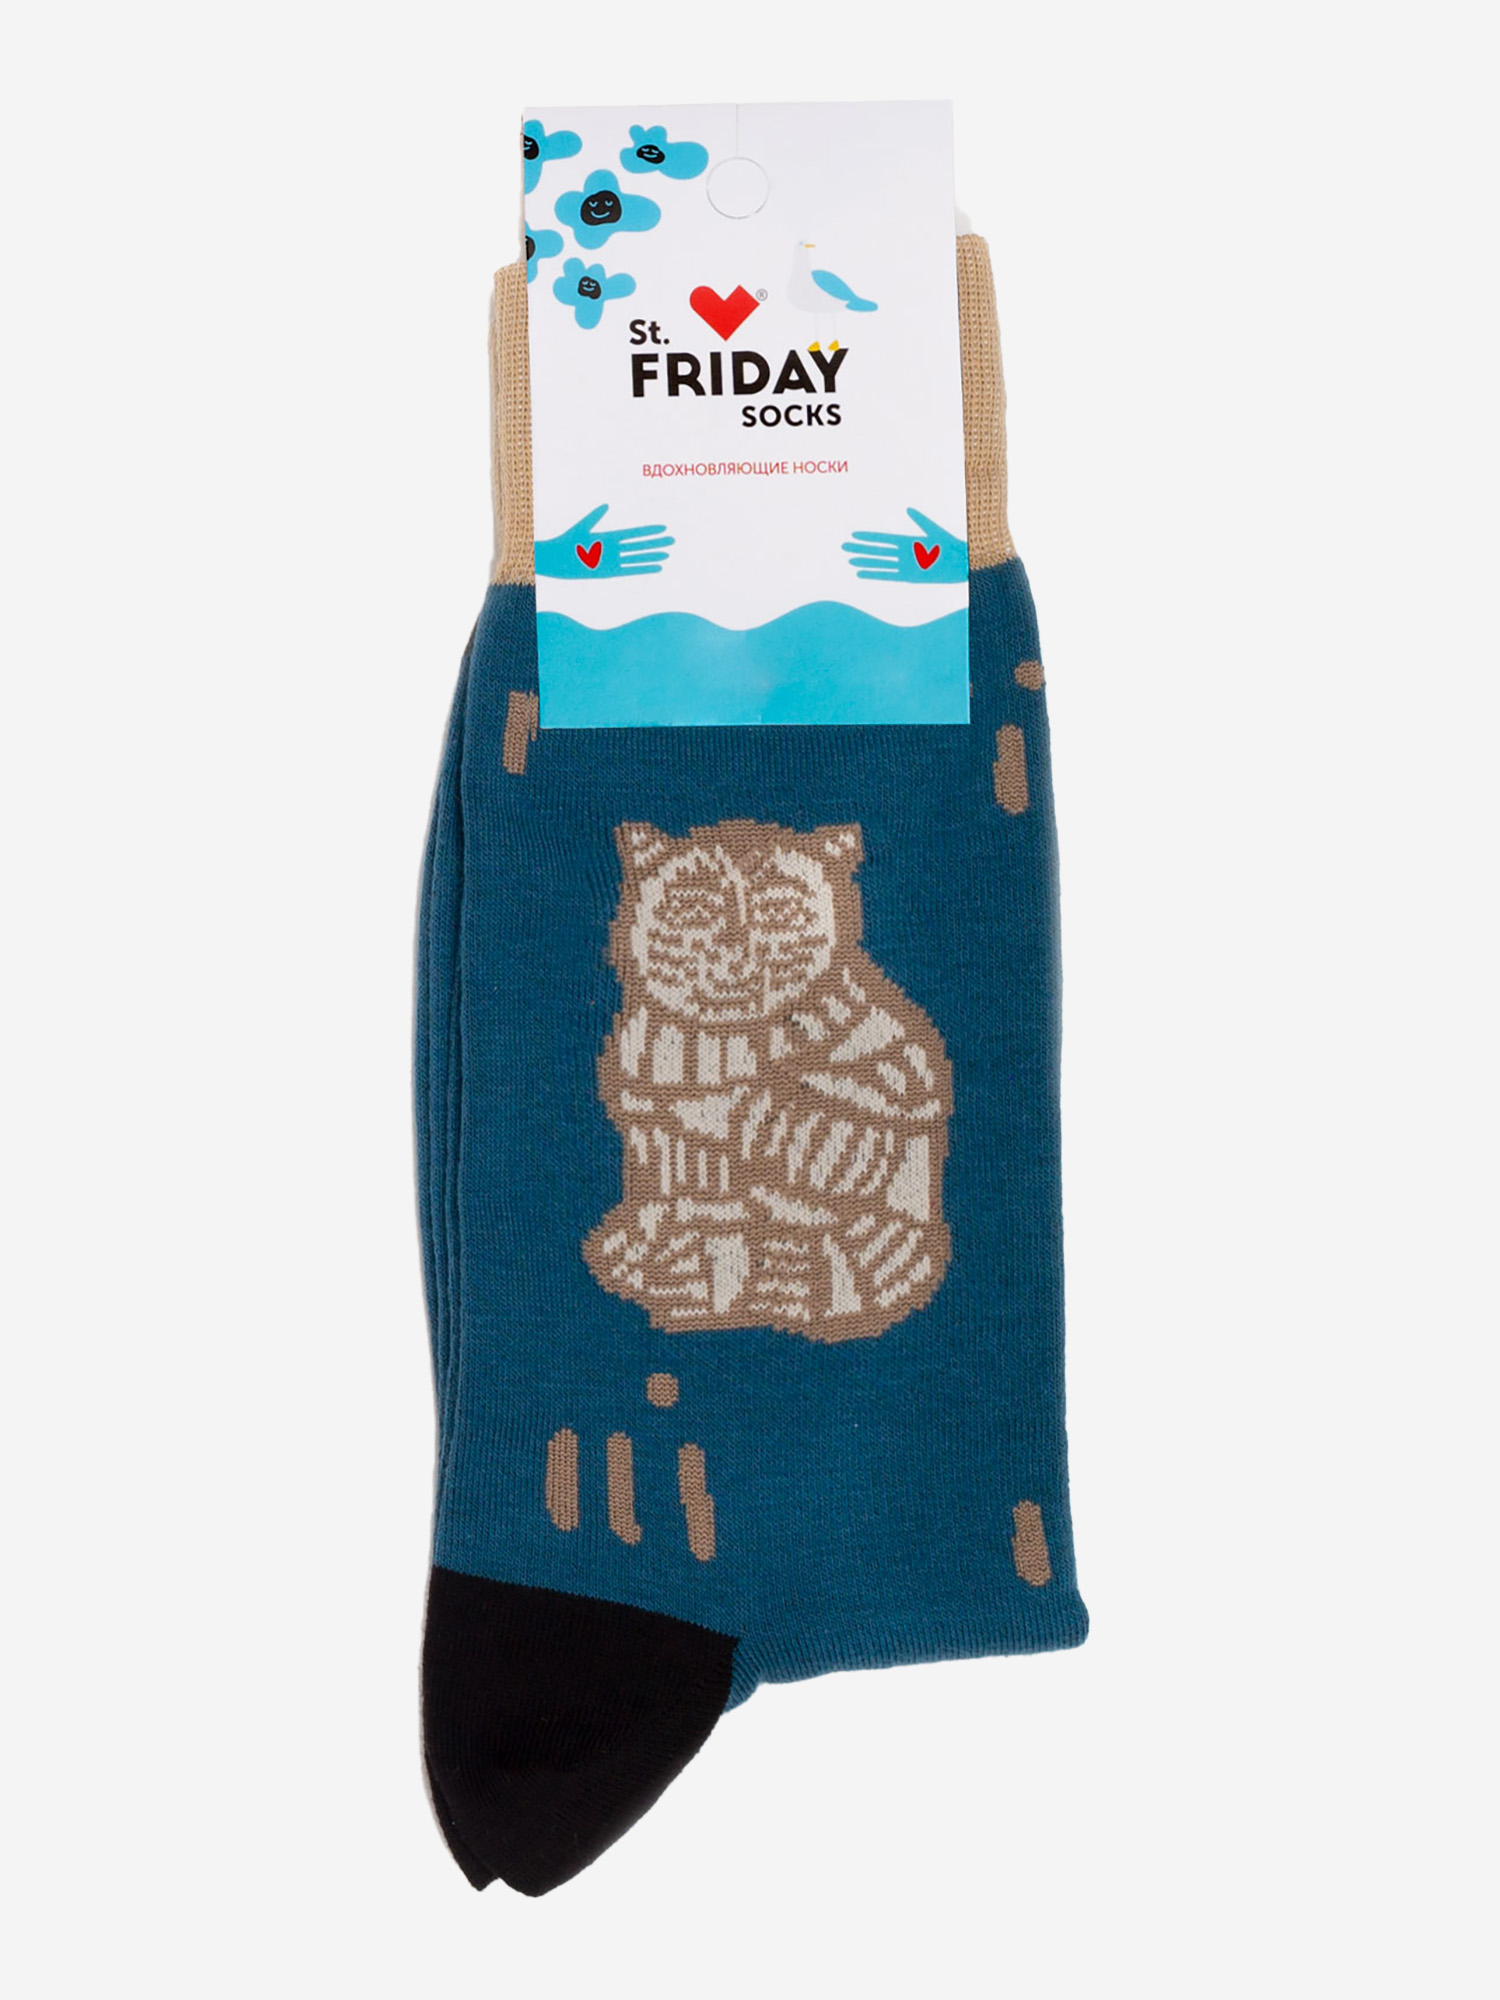 Носки с рисунками St.Friday Socks - Пряник кот, Синий медвежонок пряник